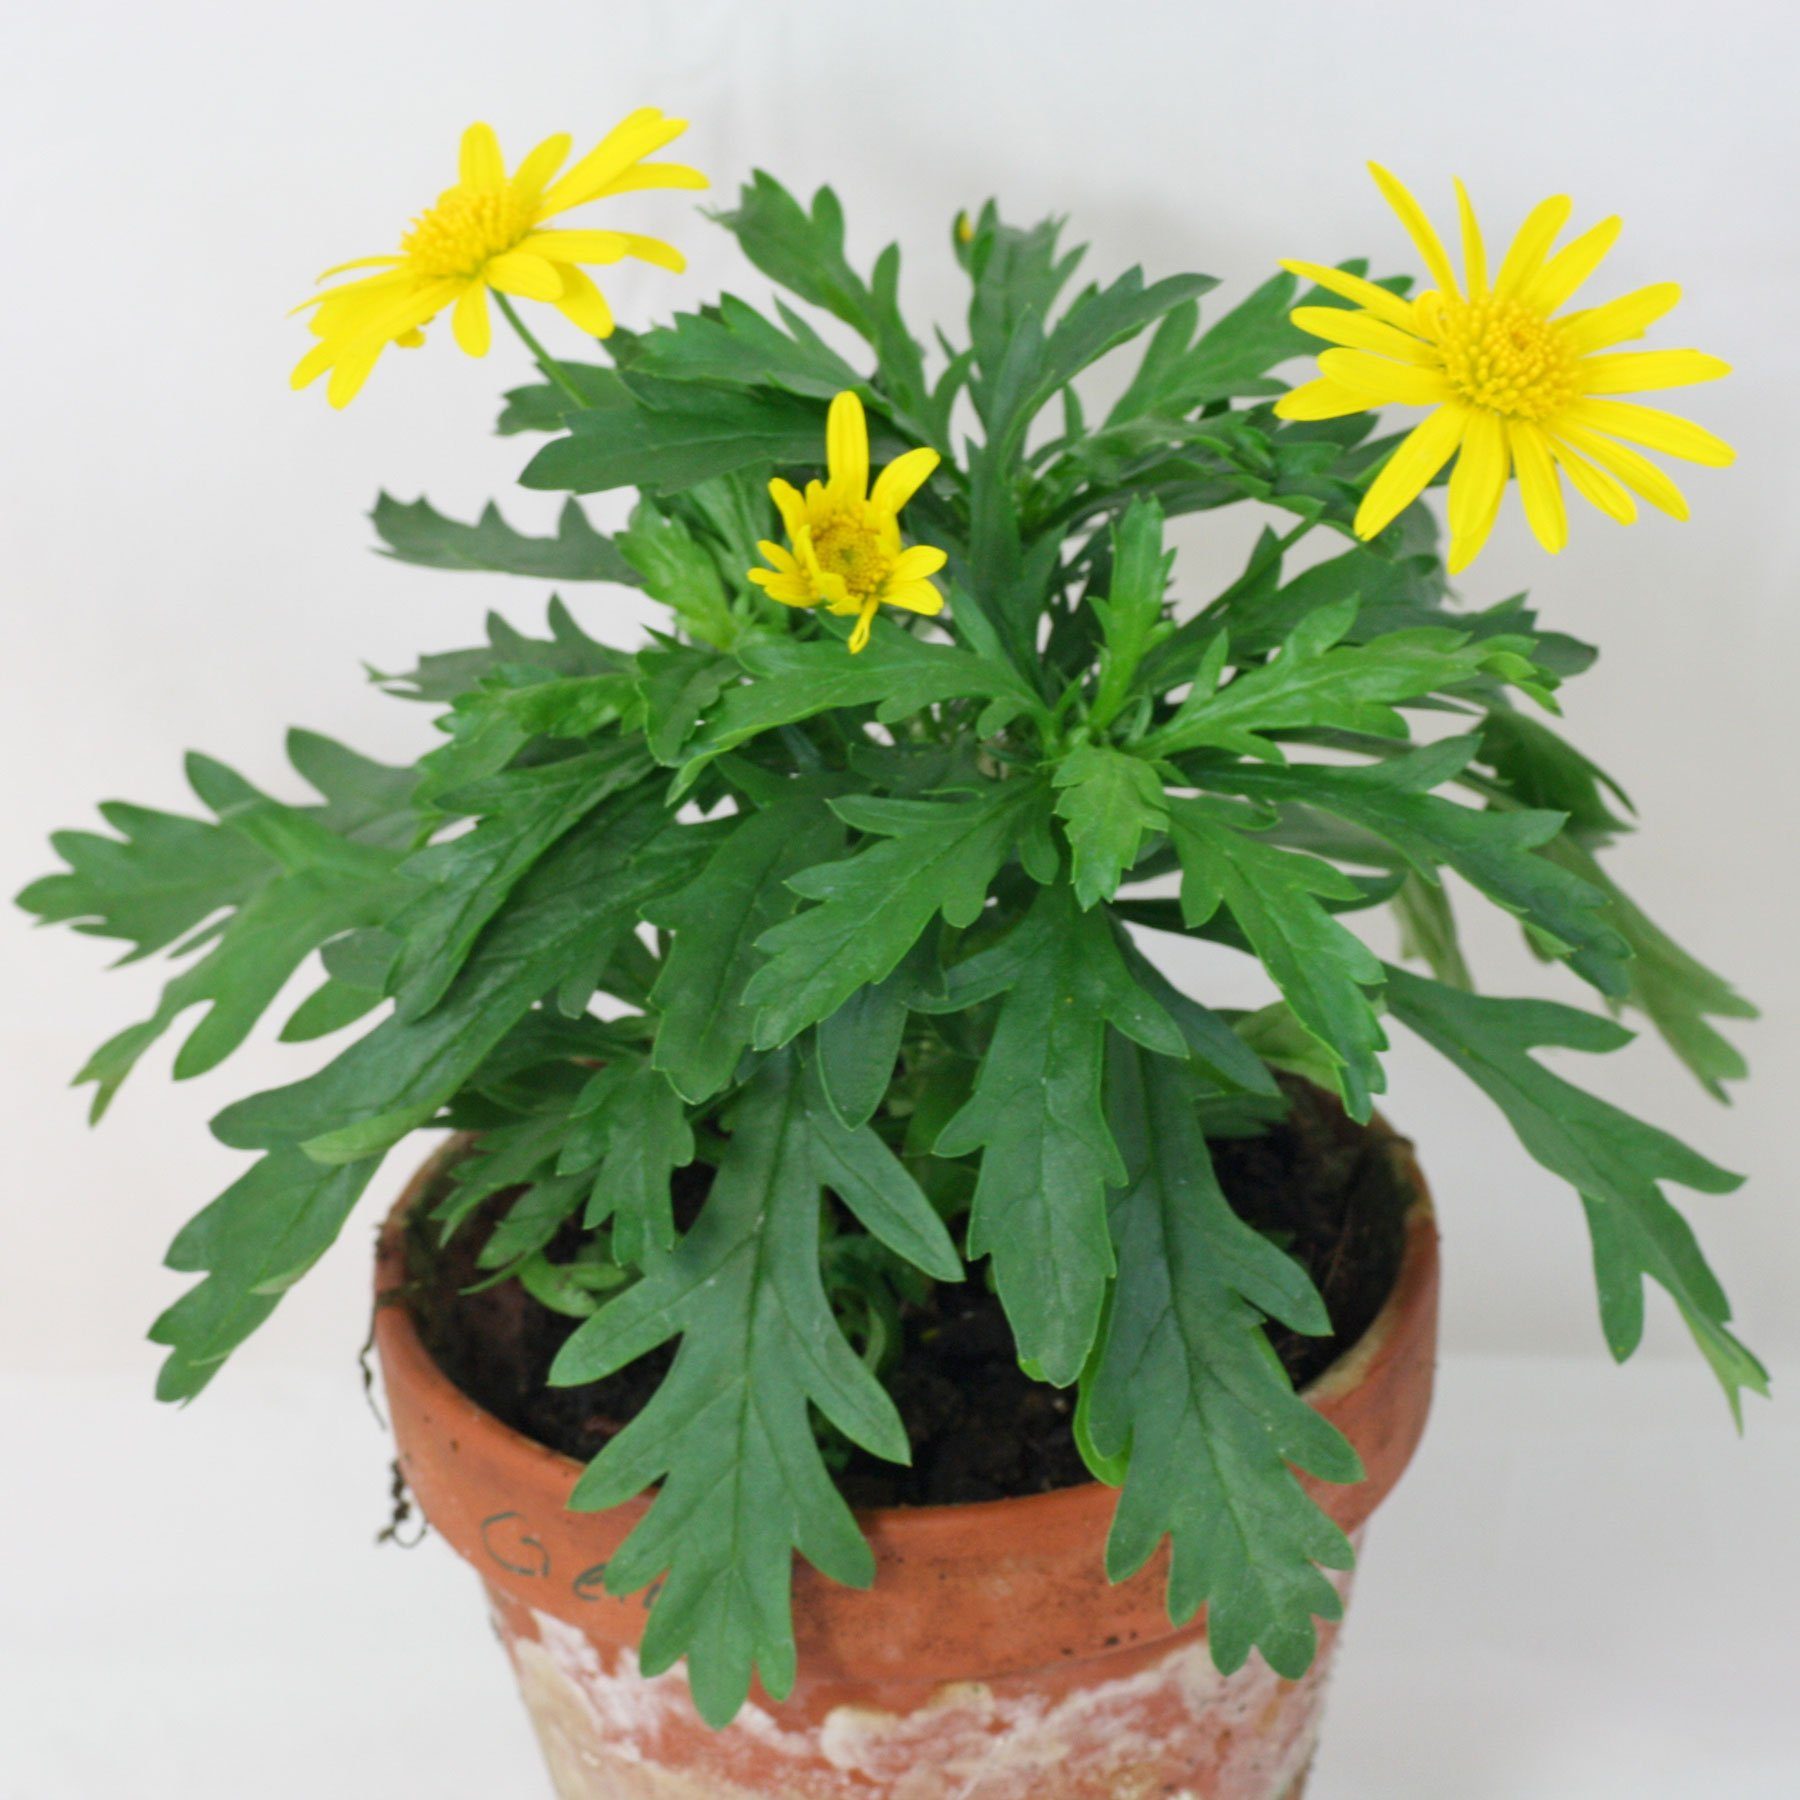 Euryops chrysanthemoides